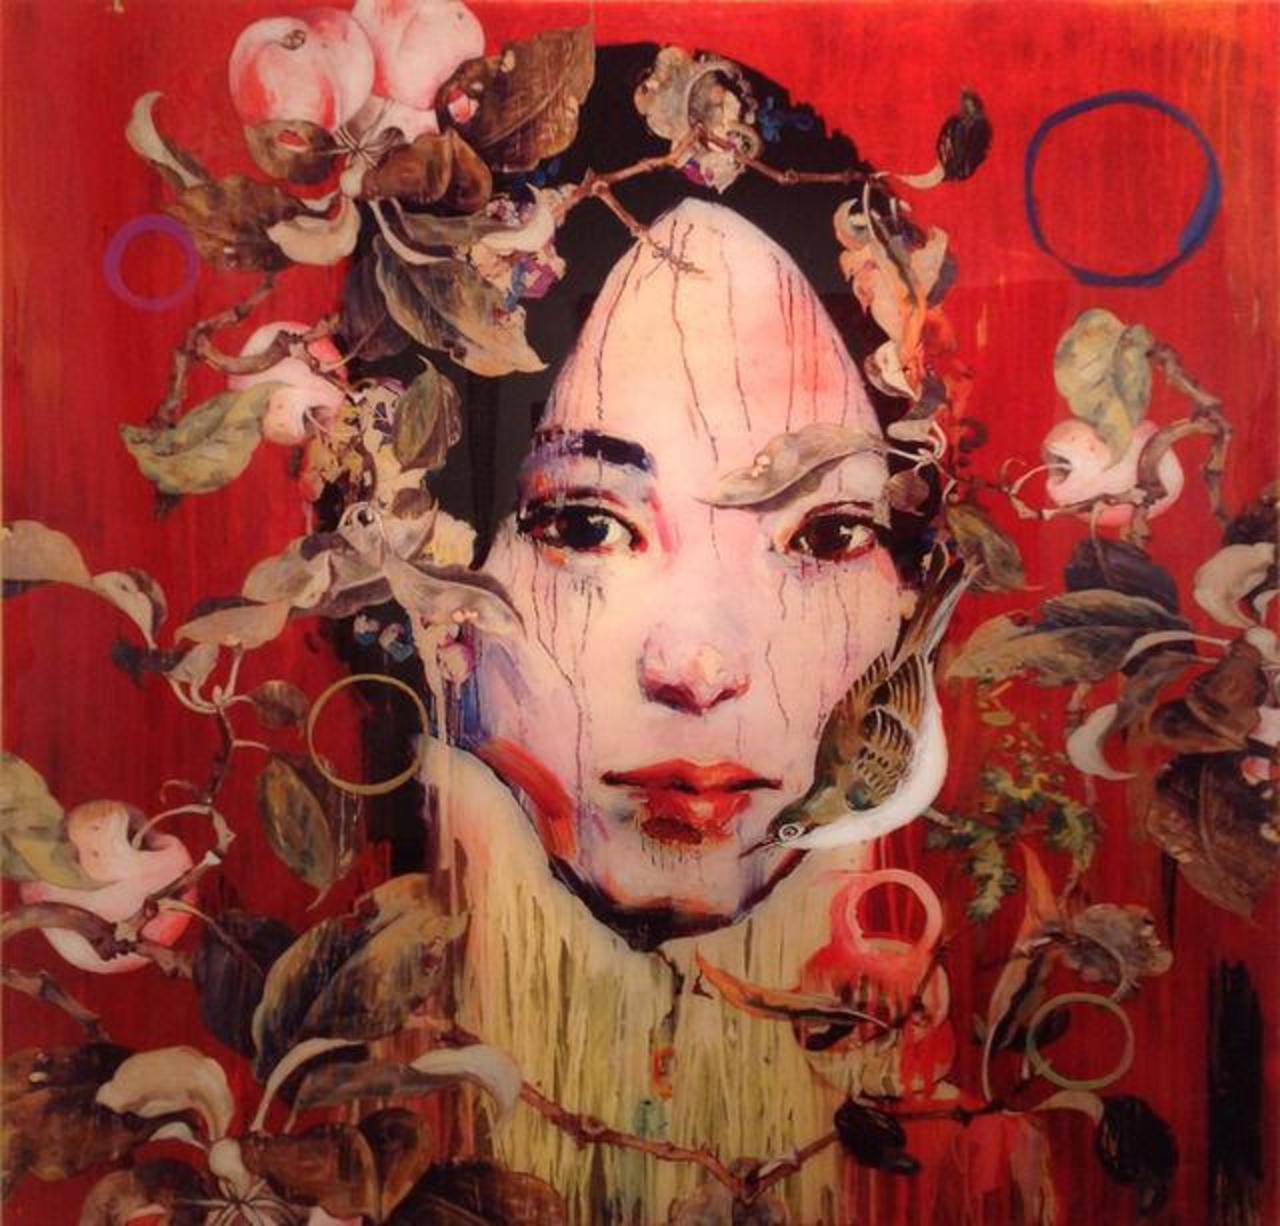 Peresphone IV by Hung Liu. #Art #Painting #Portrait http://t.co/A9DuHYciGB